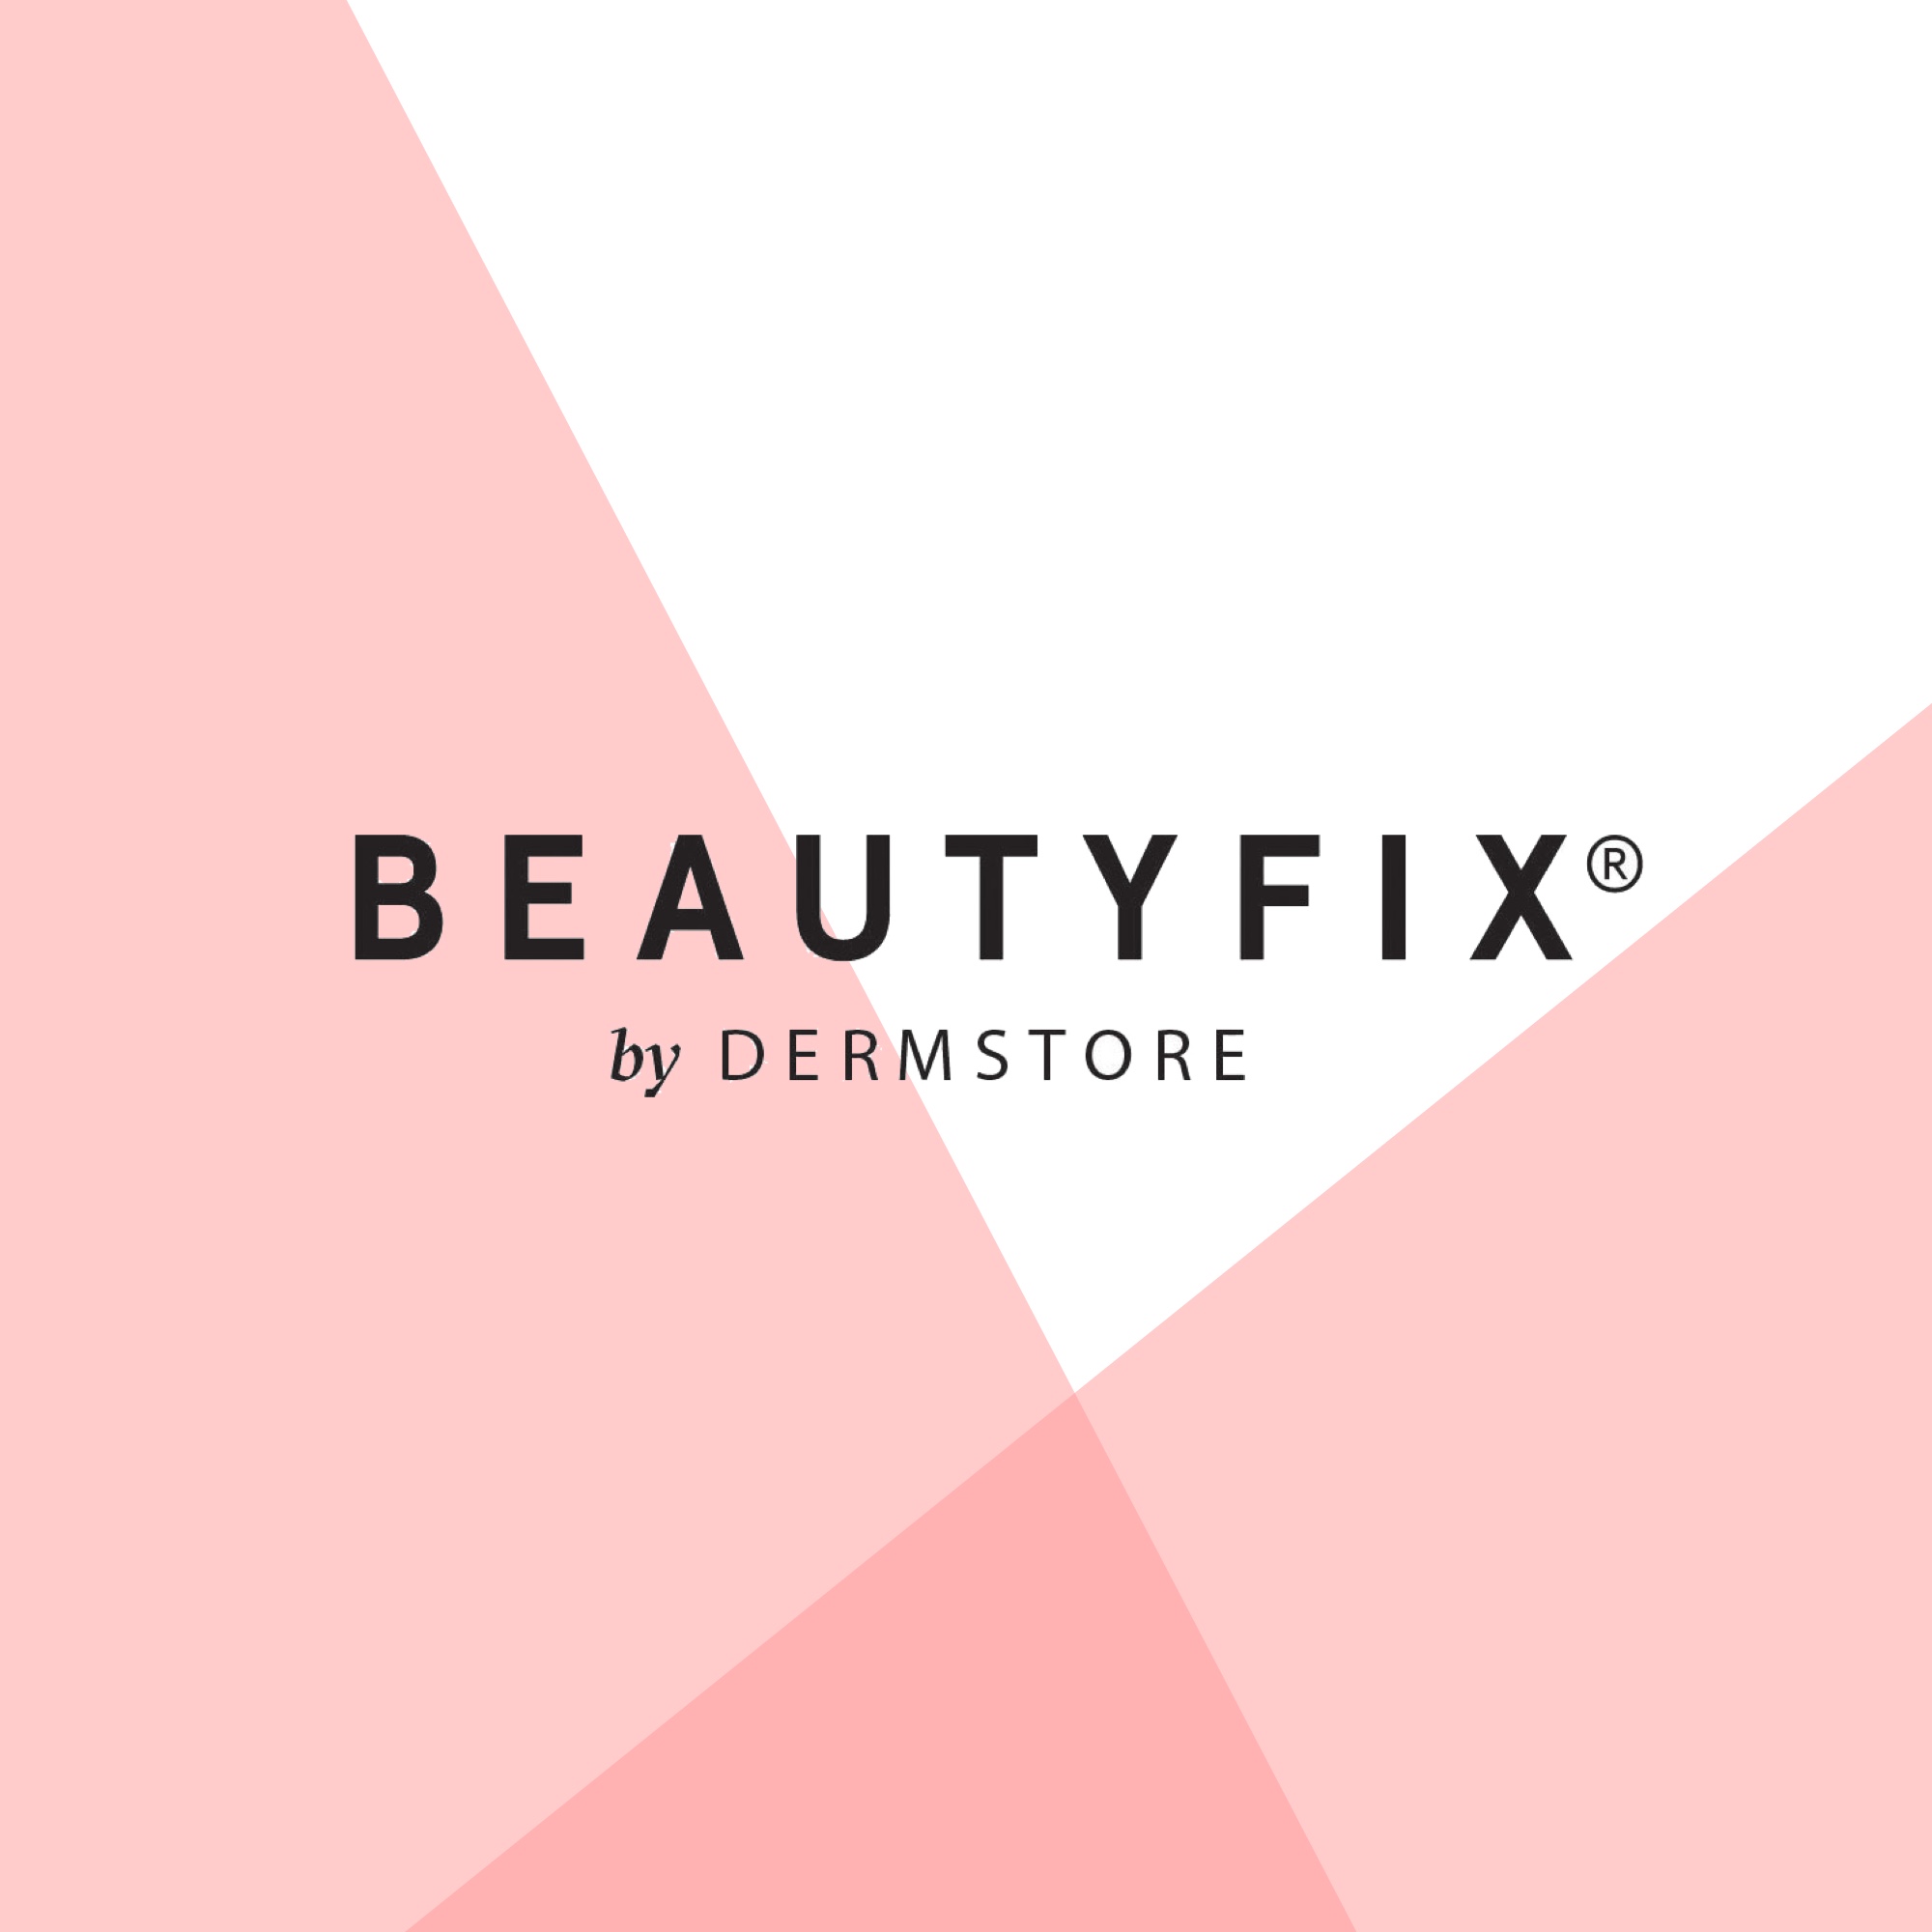 Last Call for BeautyFIX Better Than Black Friday 2019 Deal!